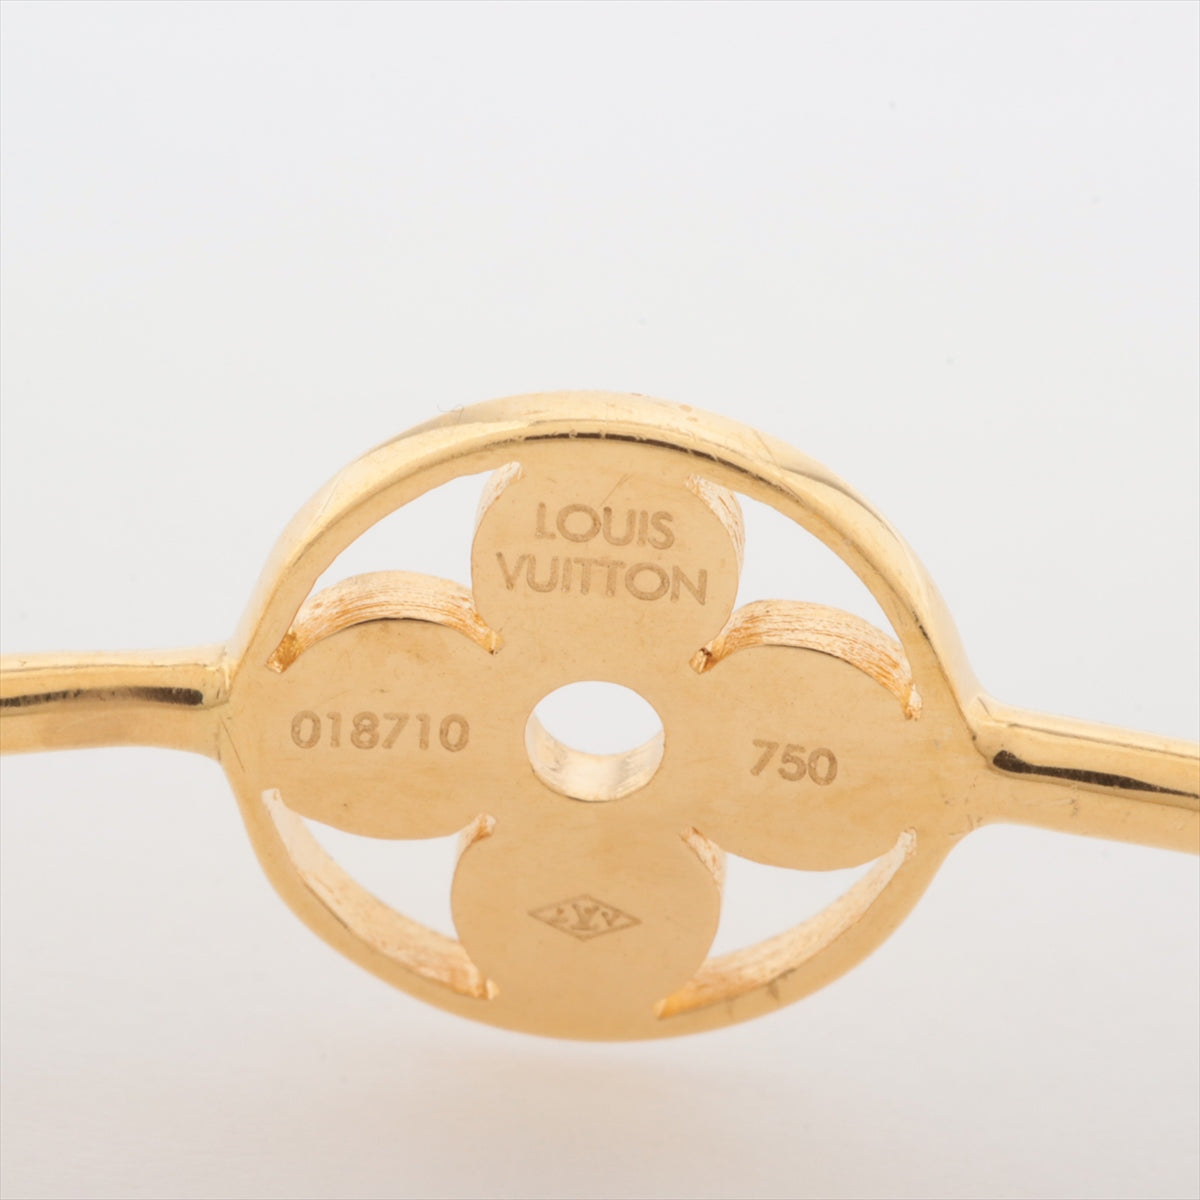 Louis Vuitton Diamond Earrings 750(YG) 15.4g